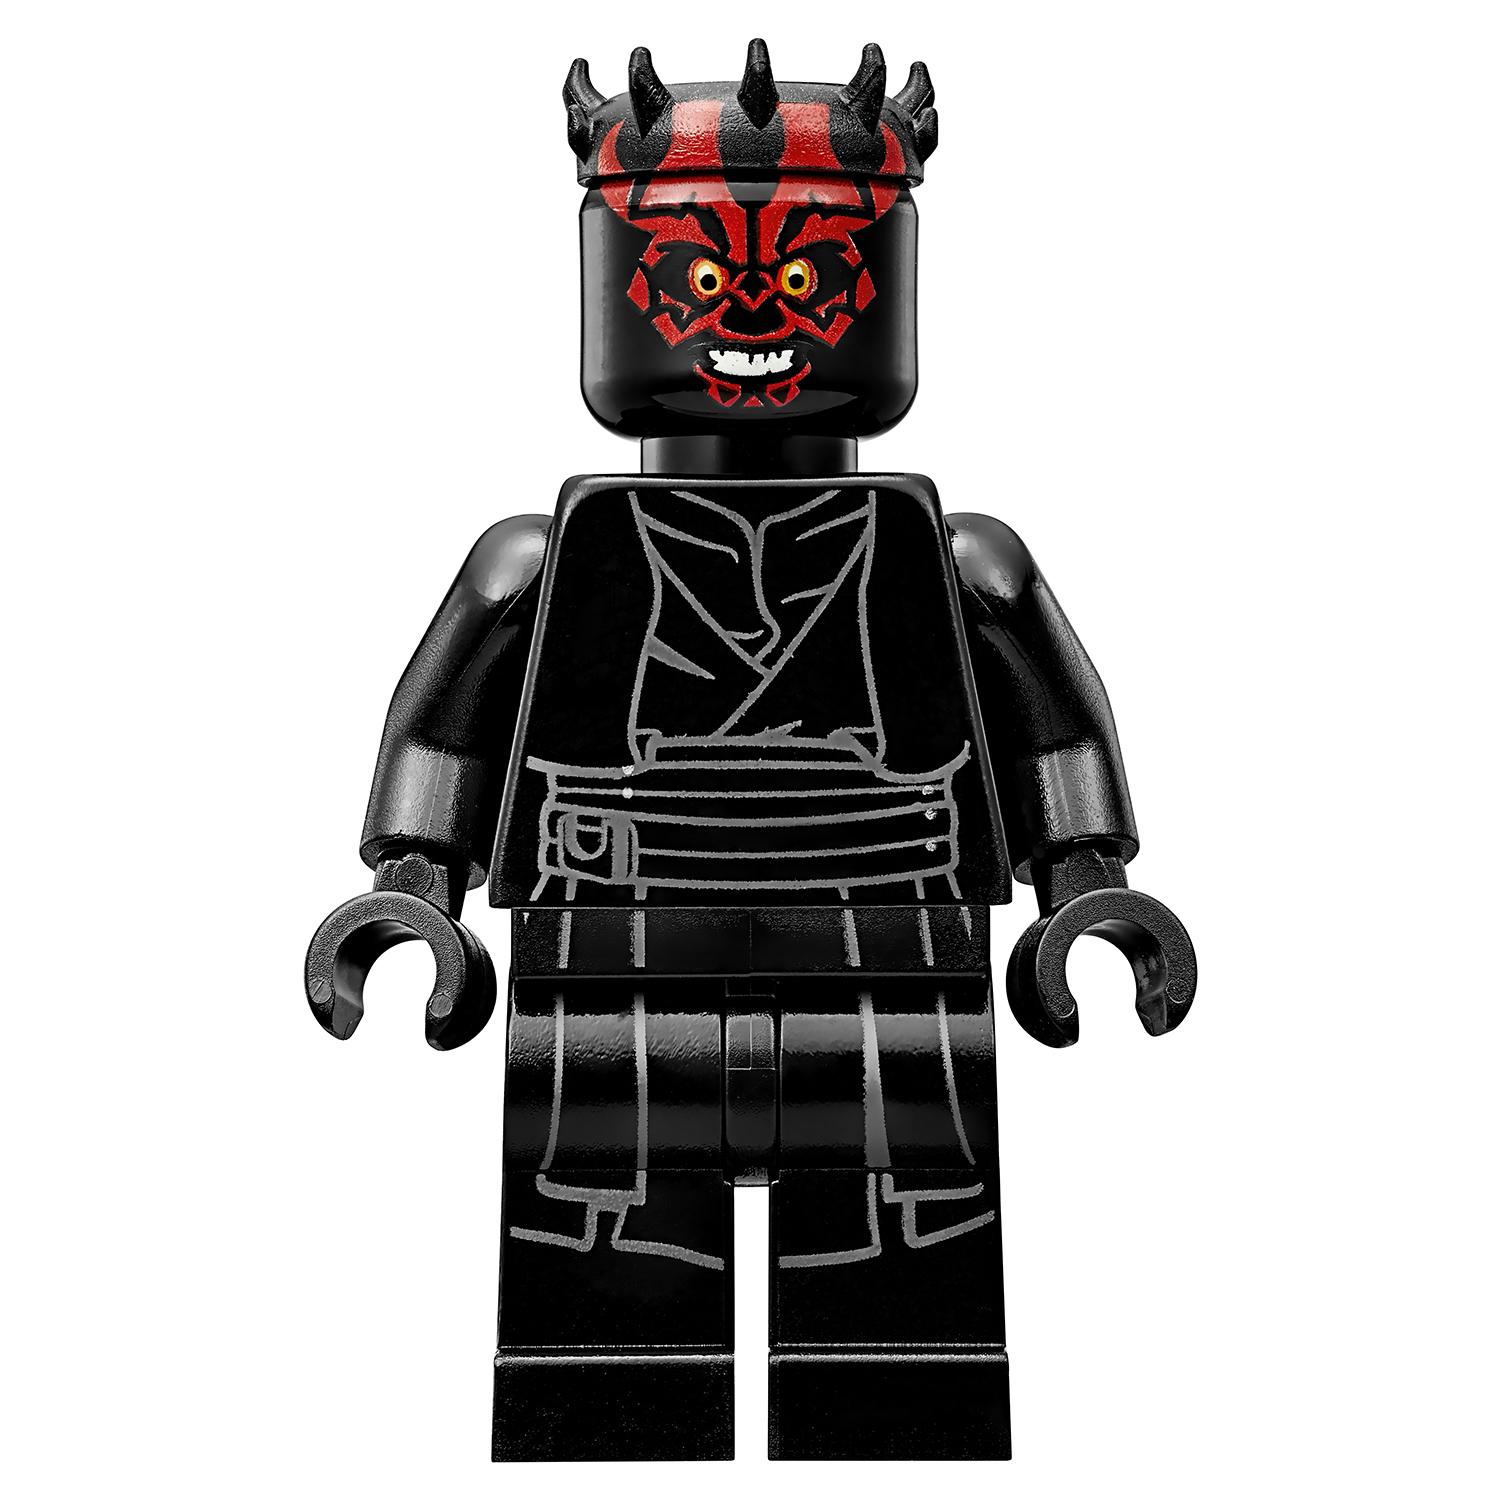 Lego Star Wars 75169 Дуэль на Набу